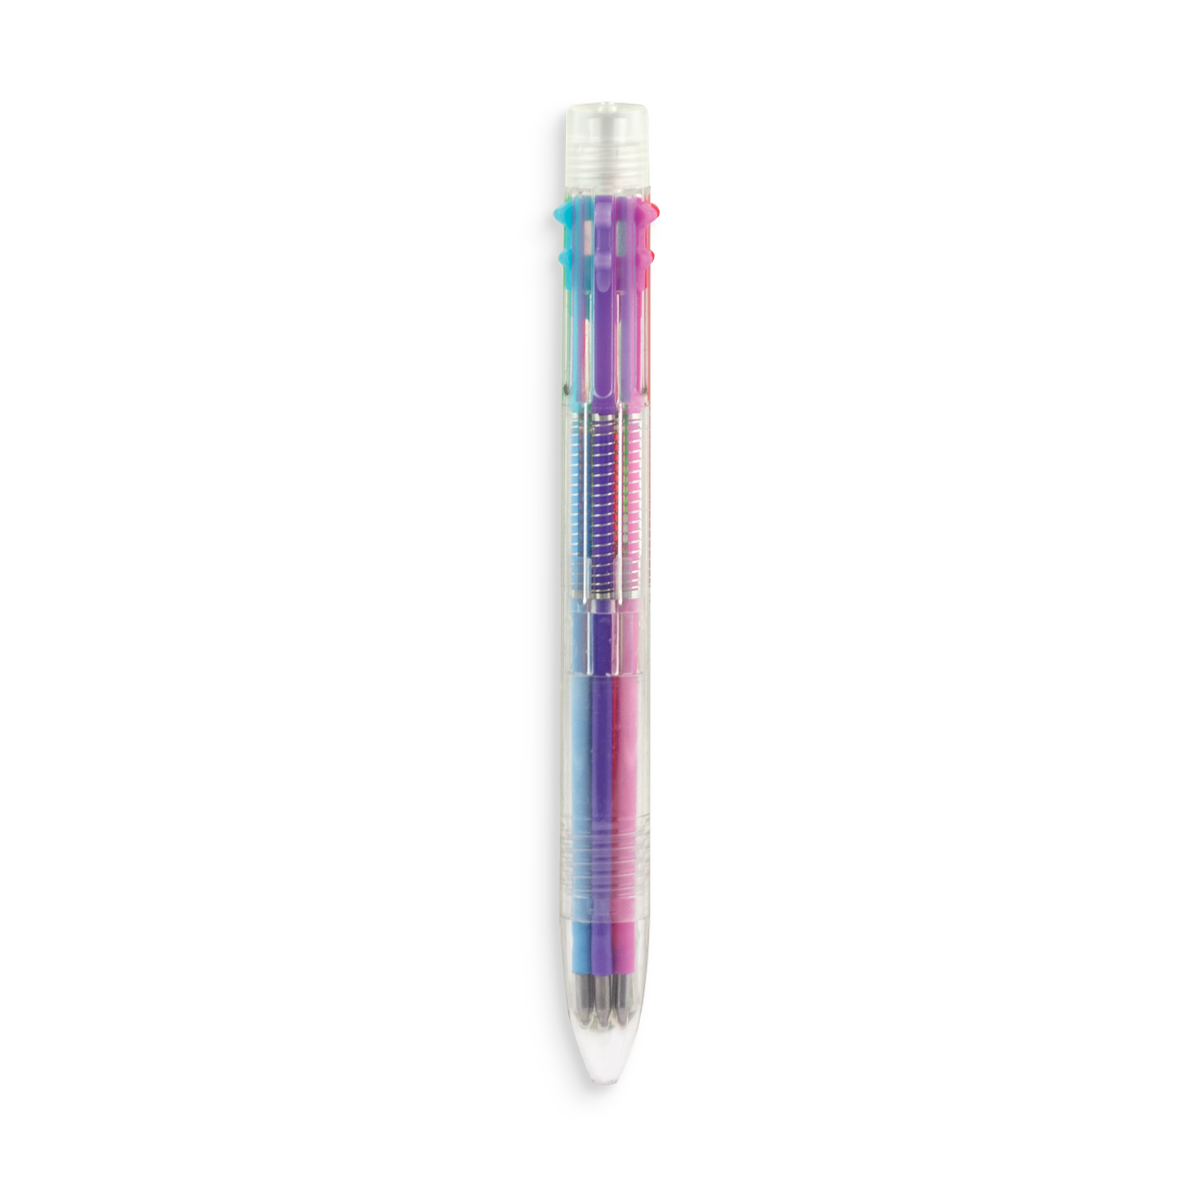 Buy 6pk SOL 10 in 1 Multi Coloured Pens All In One